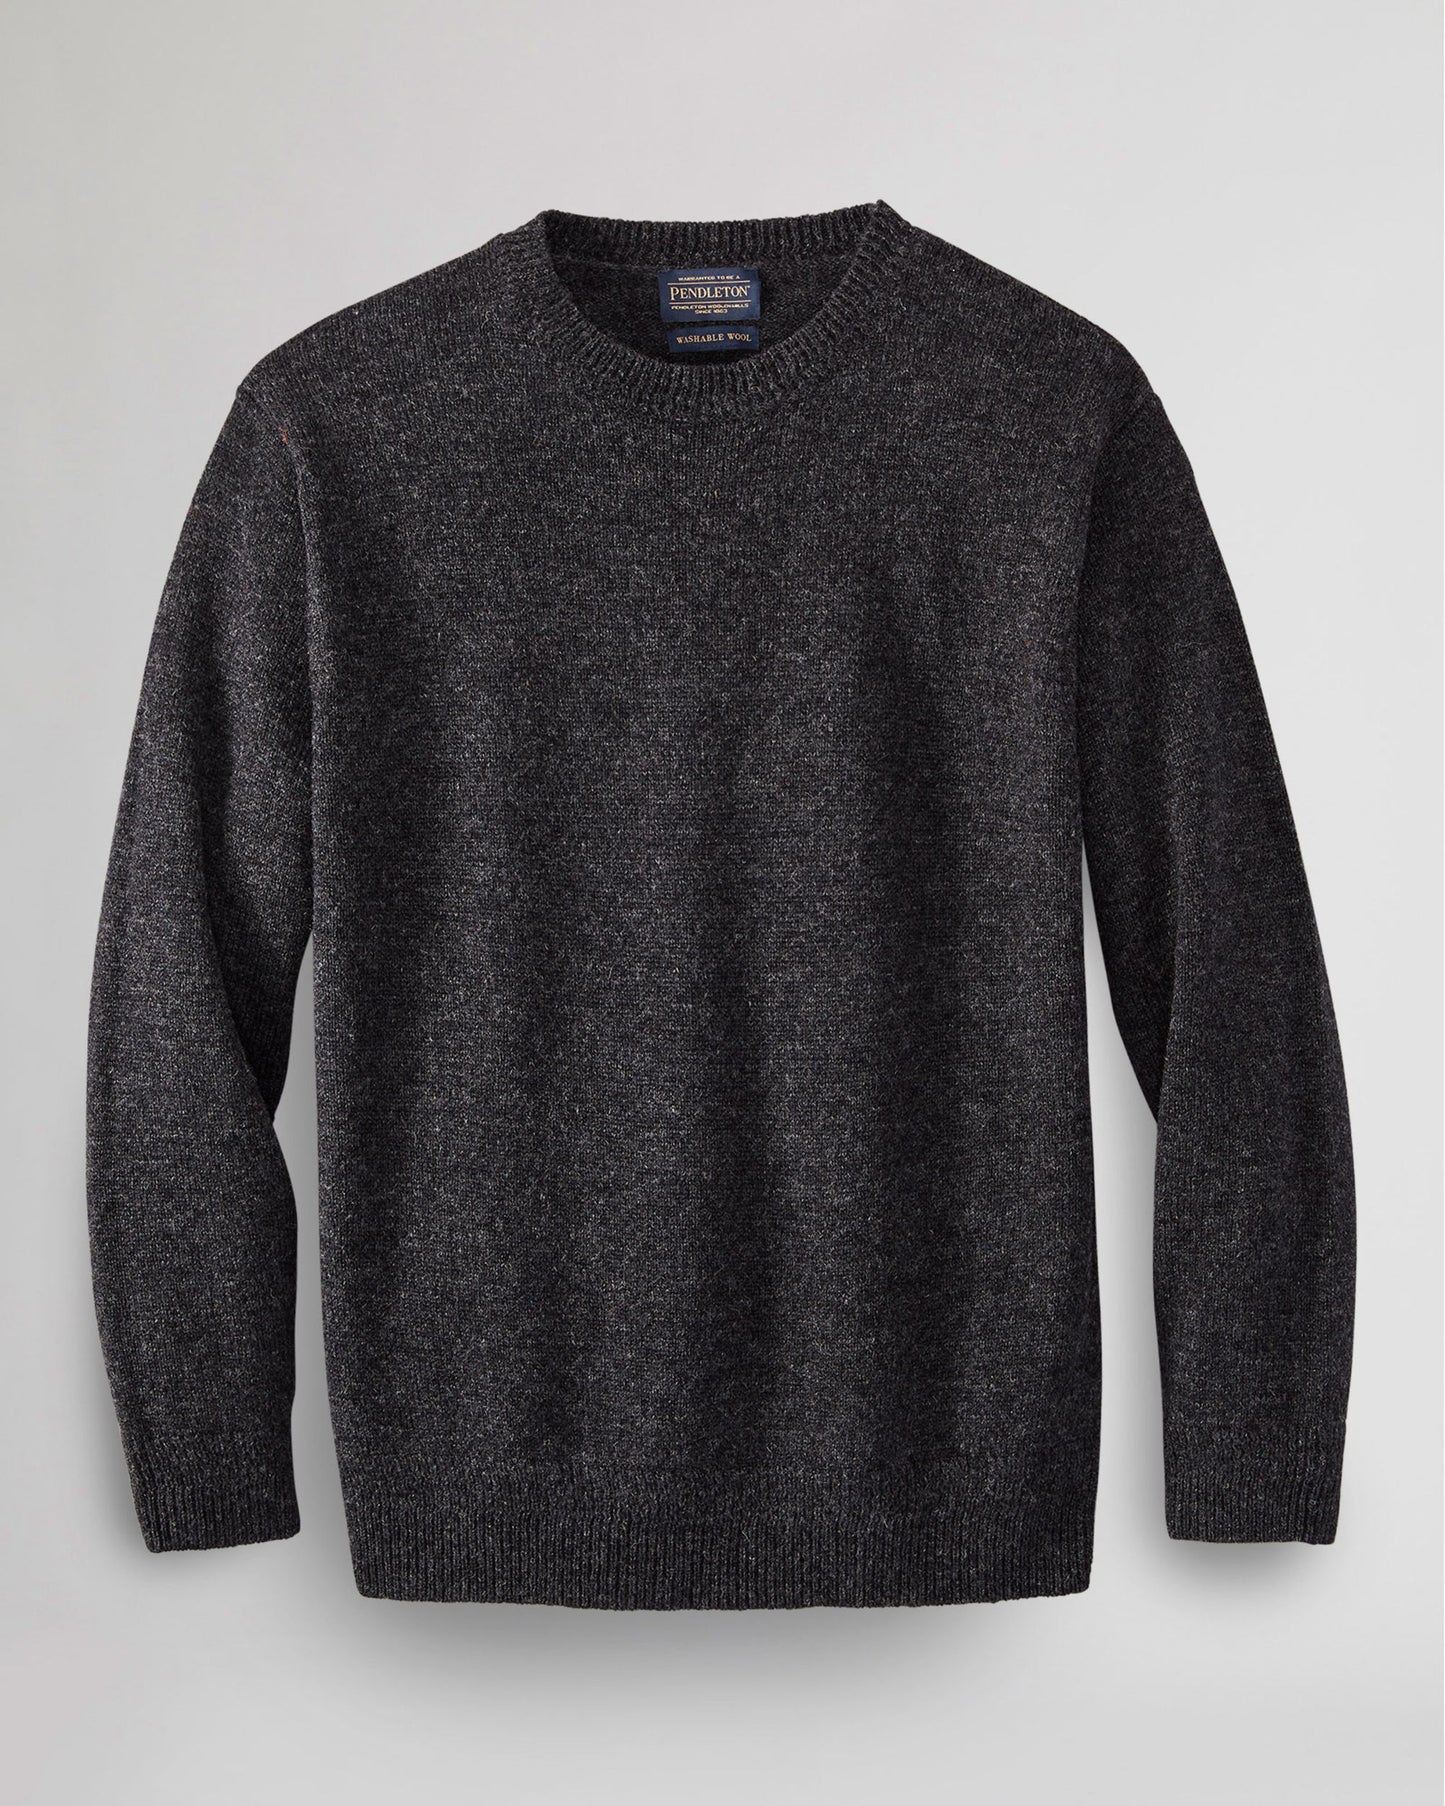 Pendleton Shetland Wool Crewneck Sweater - Black Heather